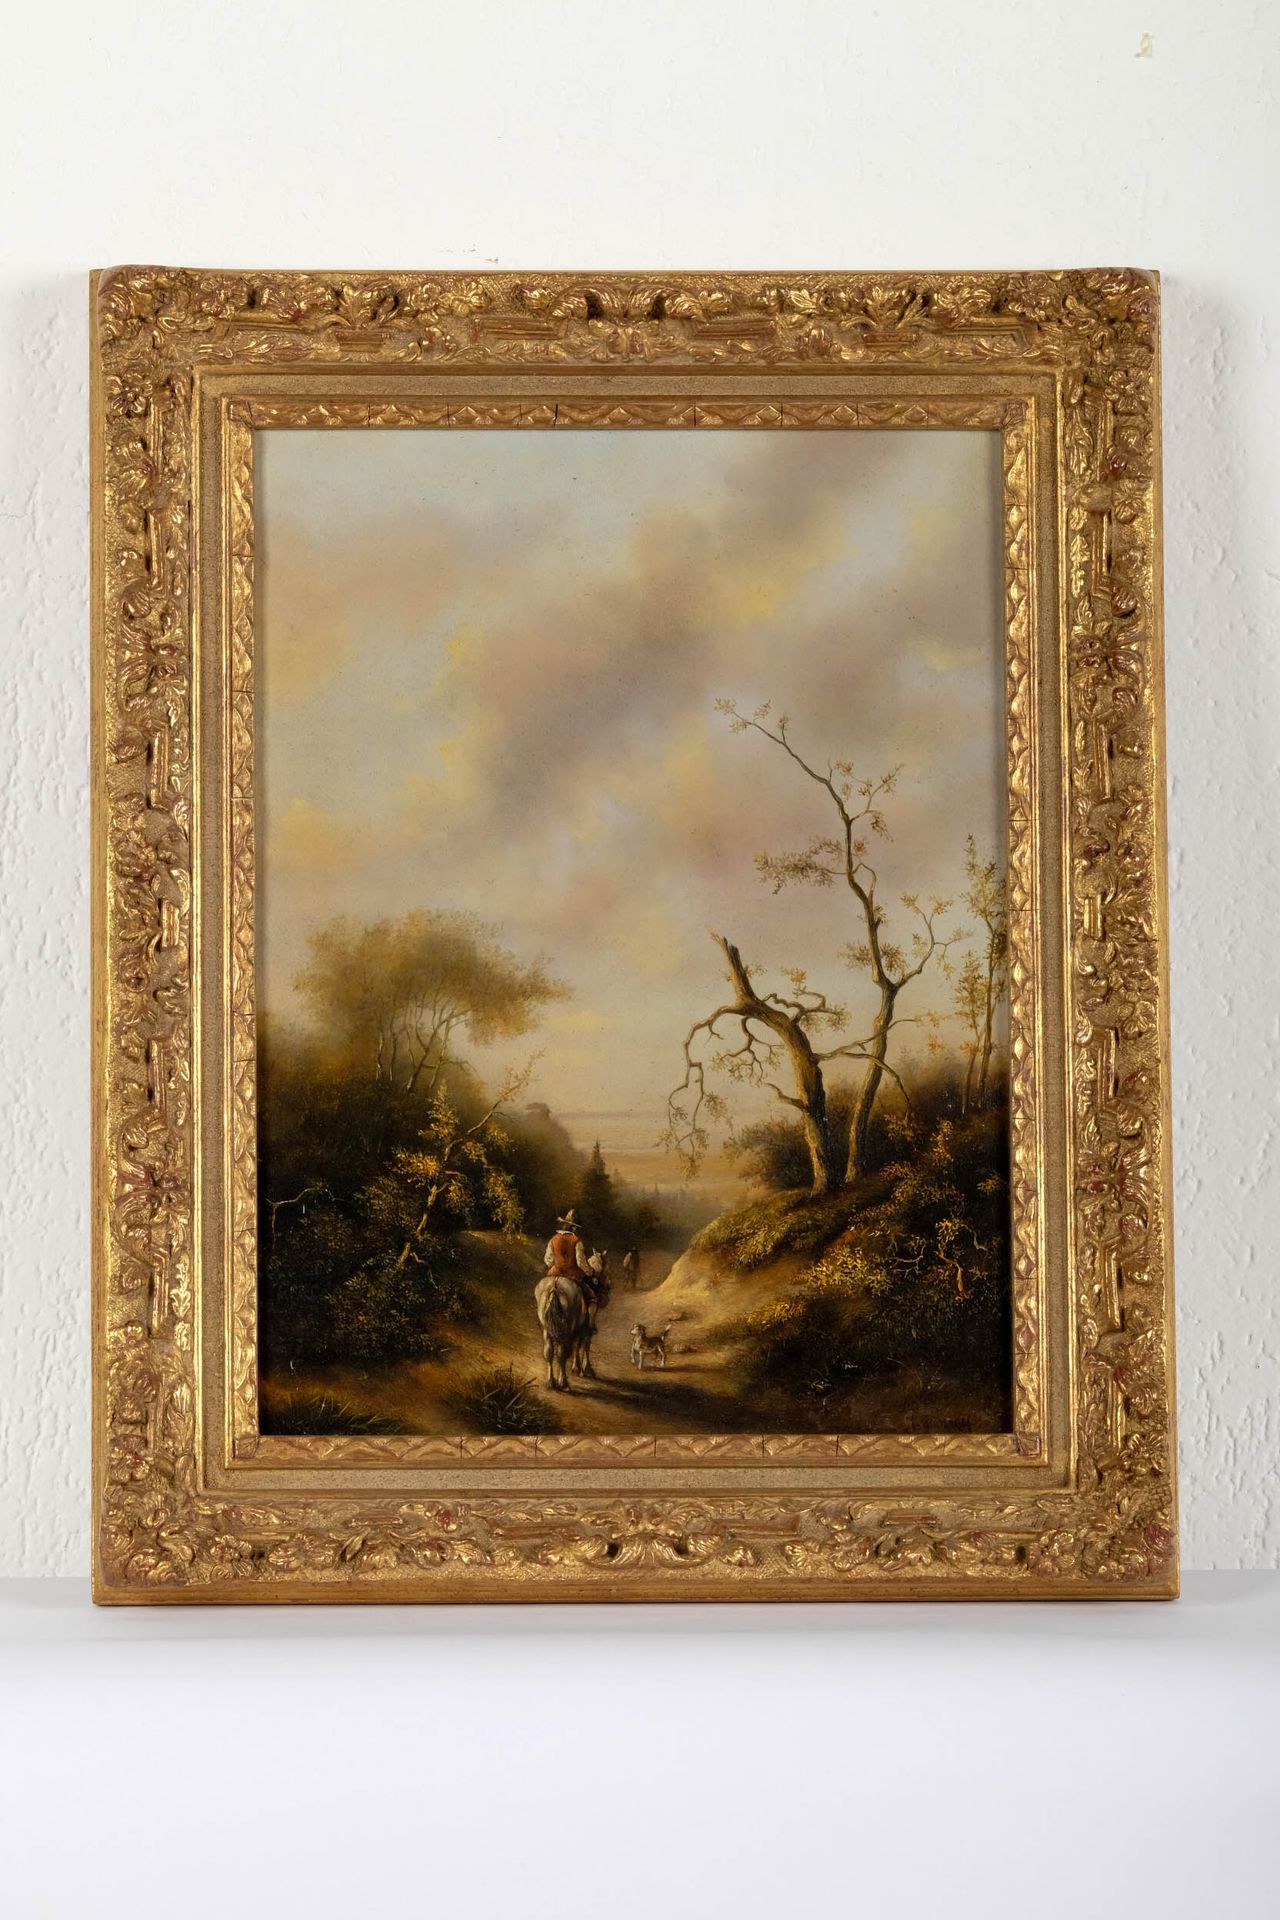 Joseph Quinaux (1822-1895) 
风景画，带框，右下角签名，40 X 30厘米。